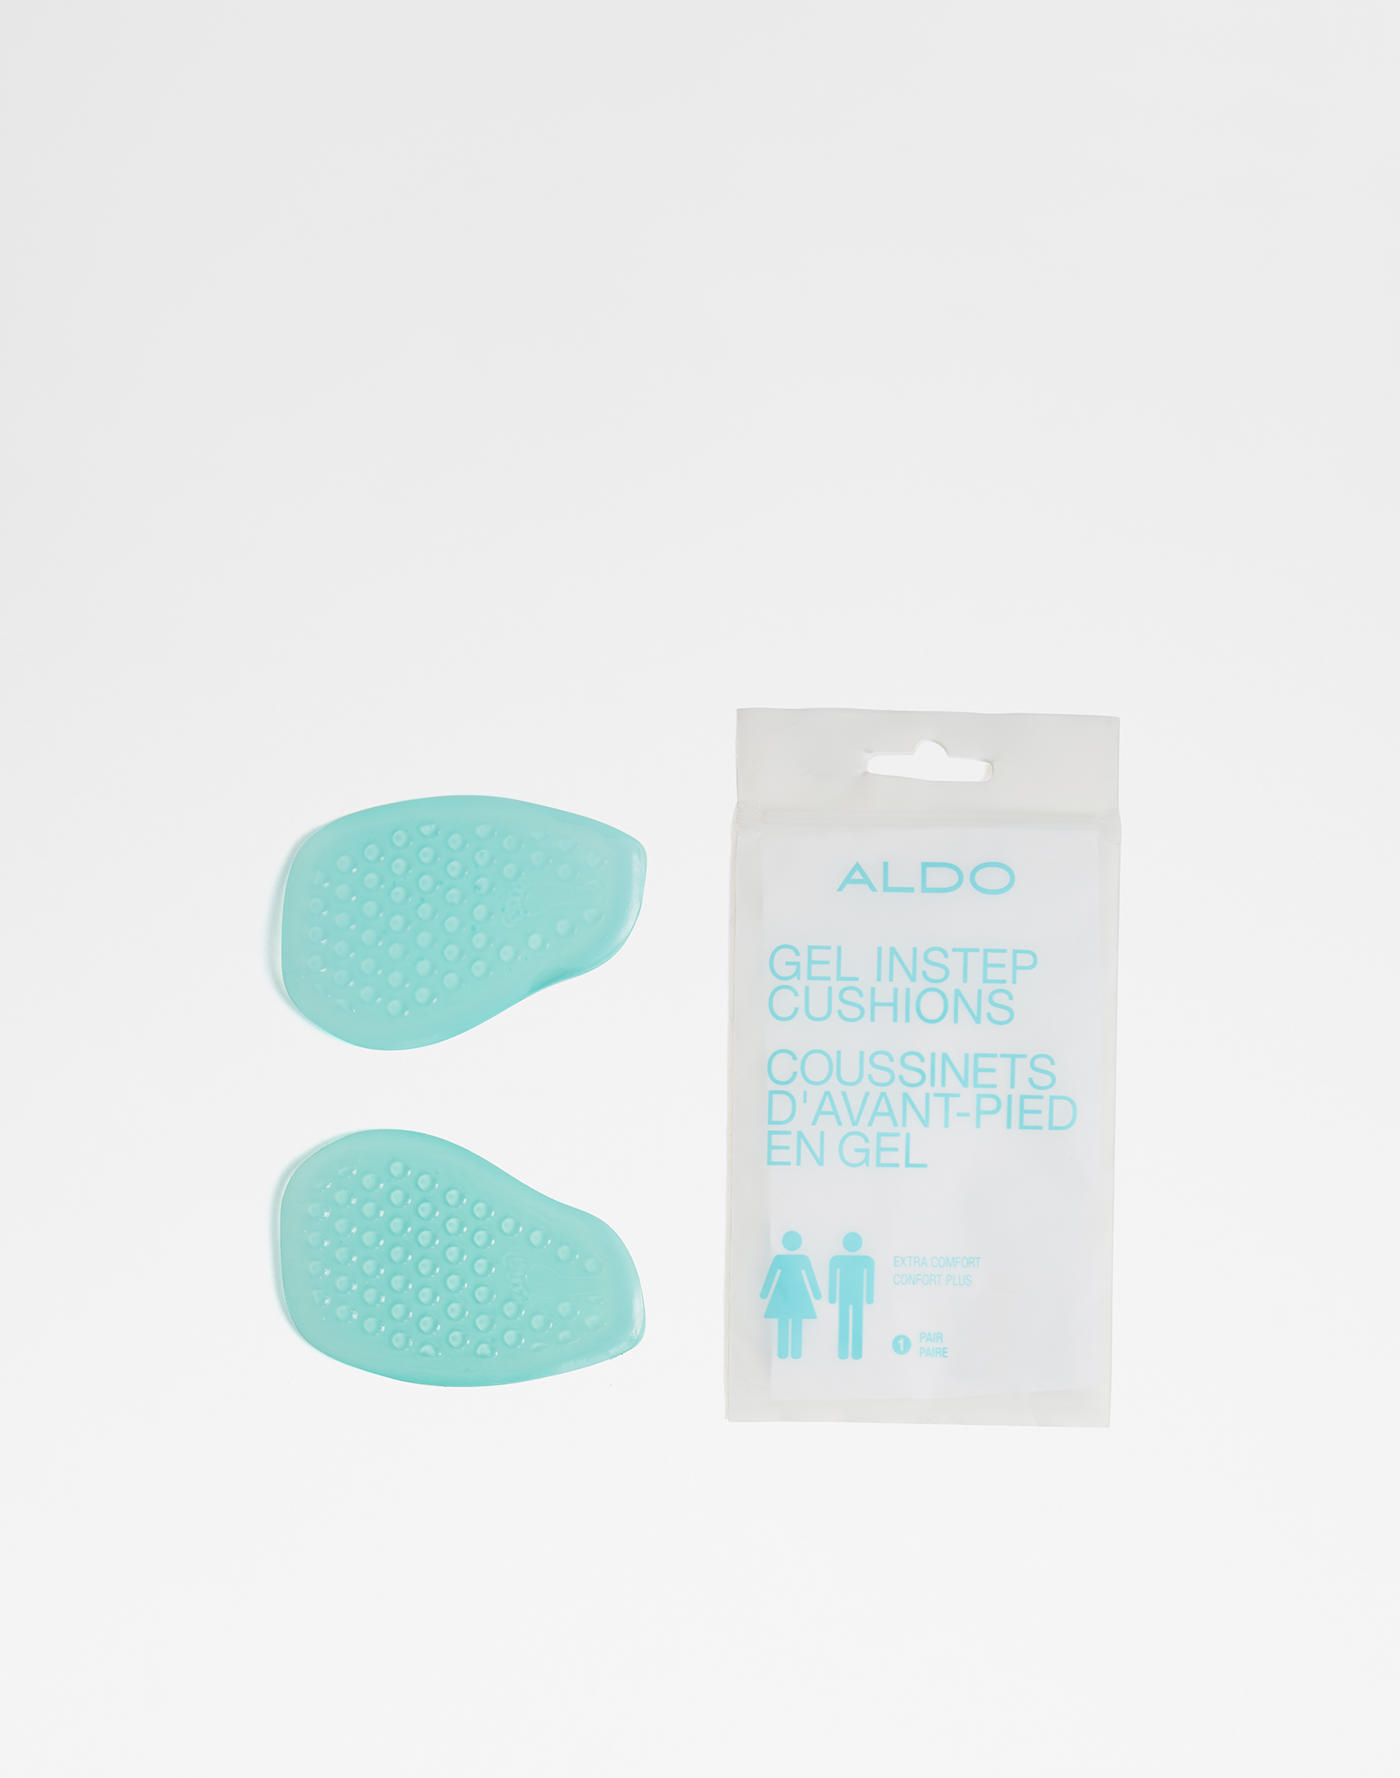 aldo water resistant lotion